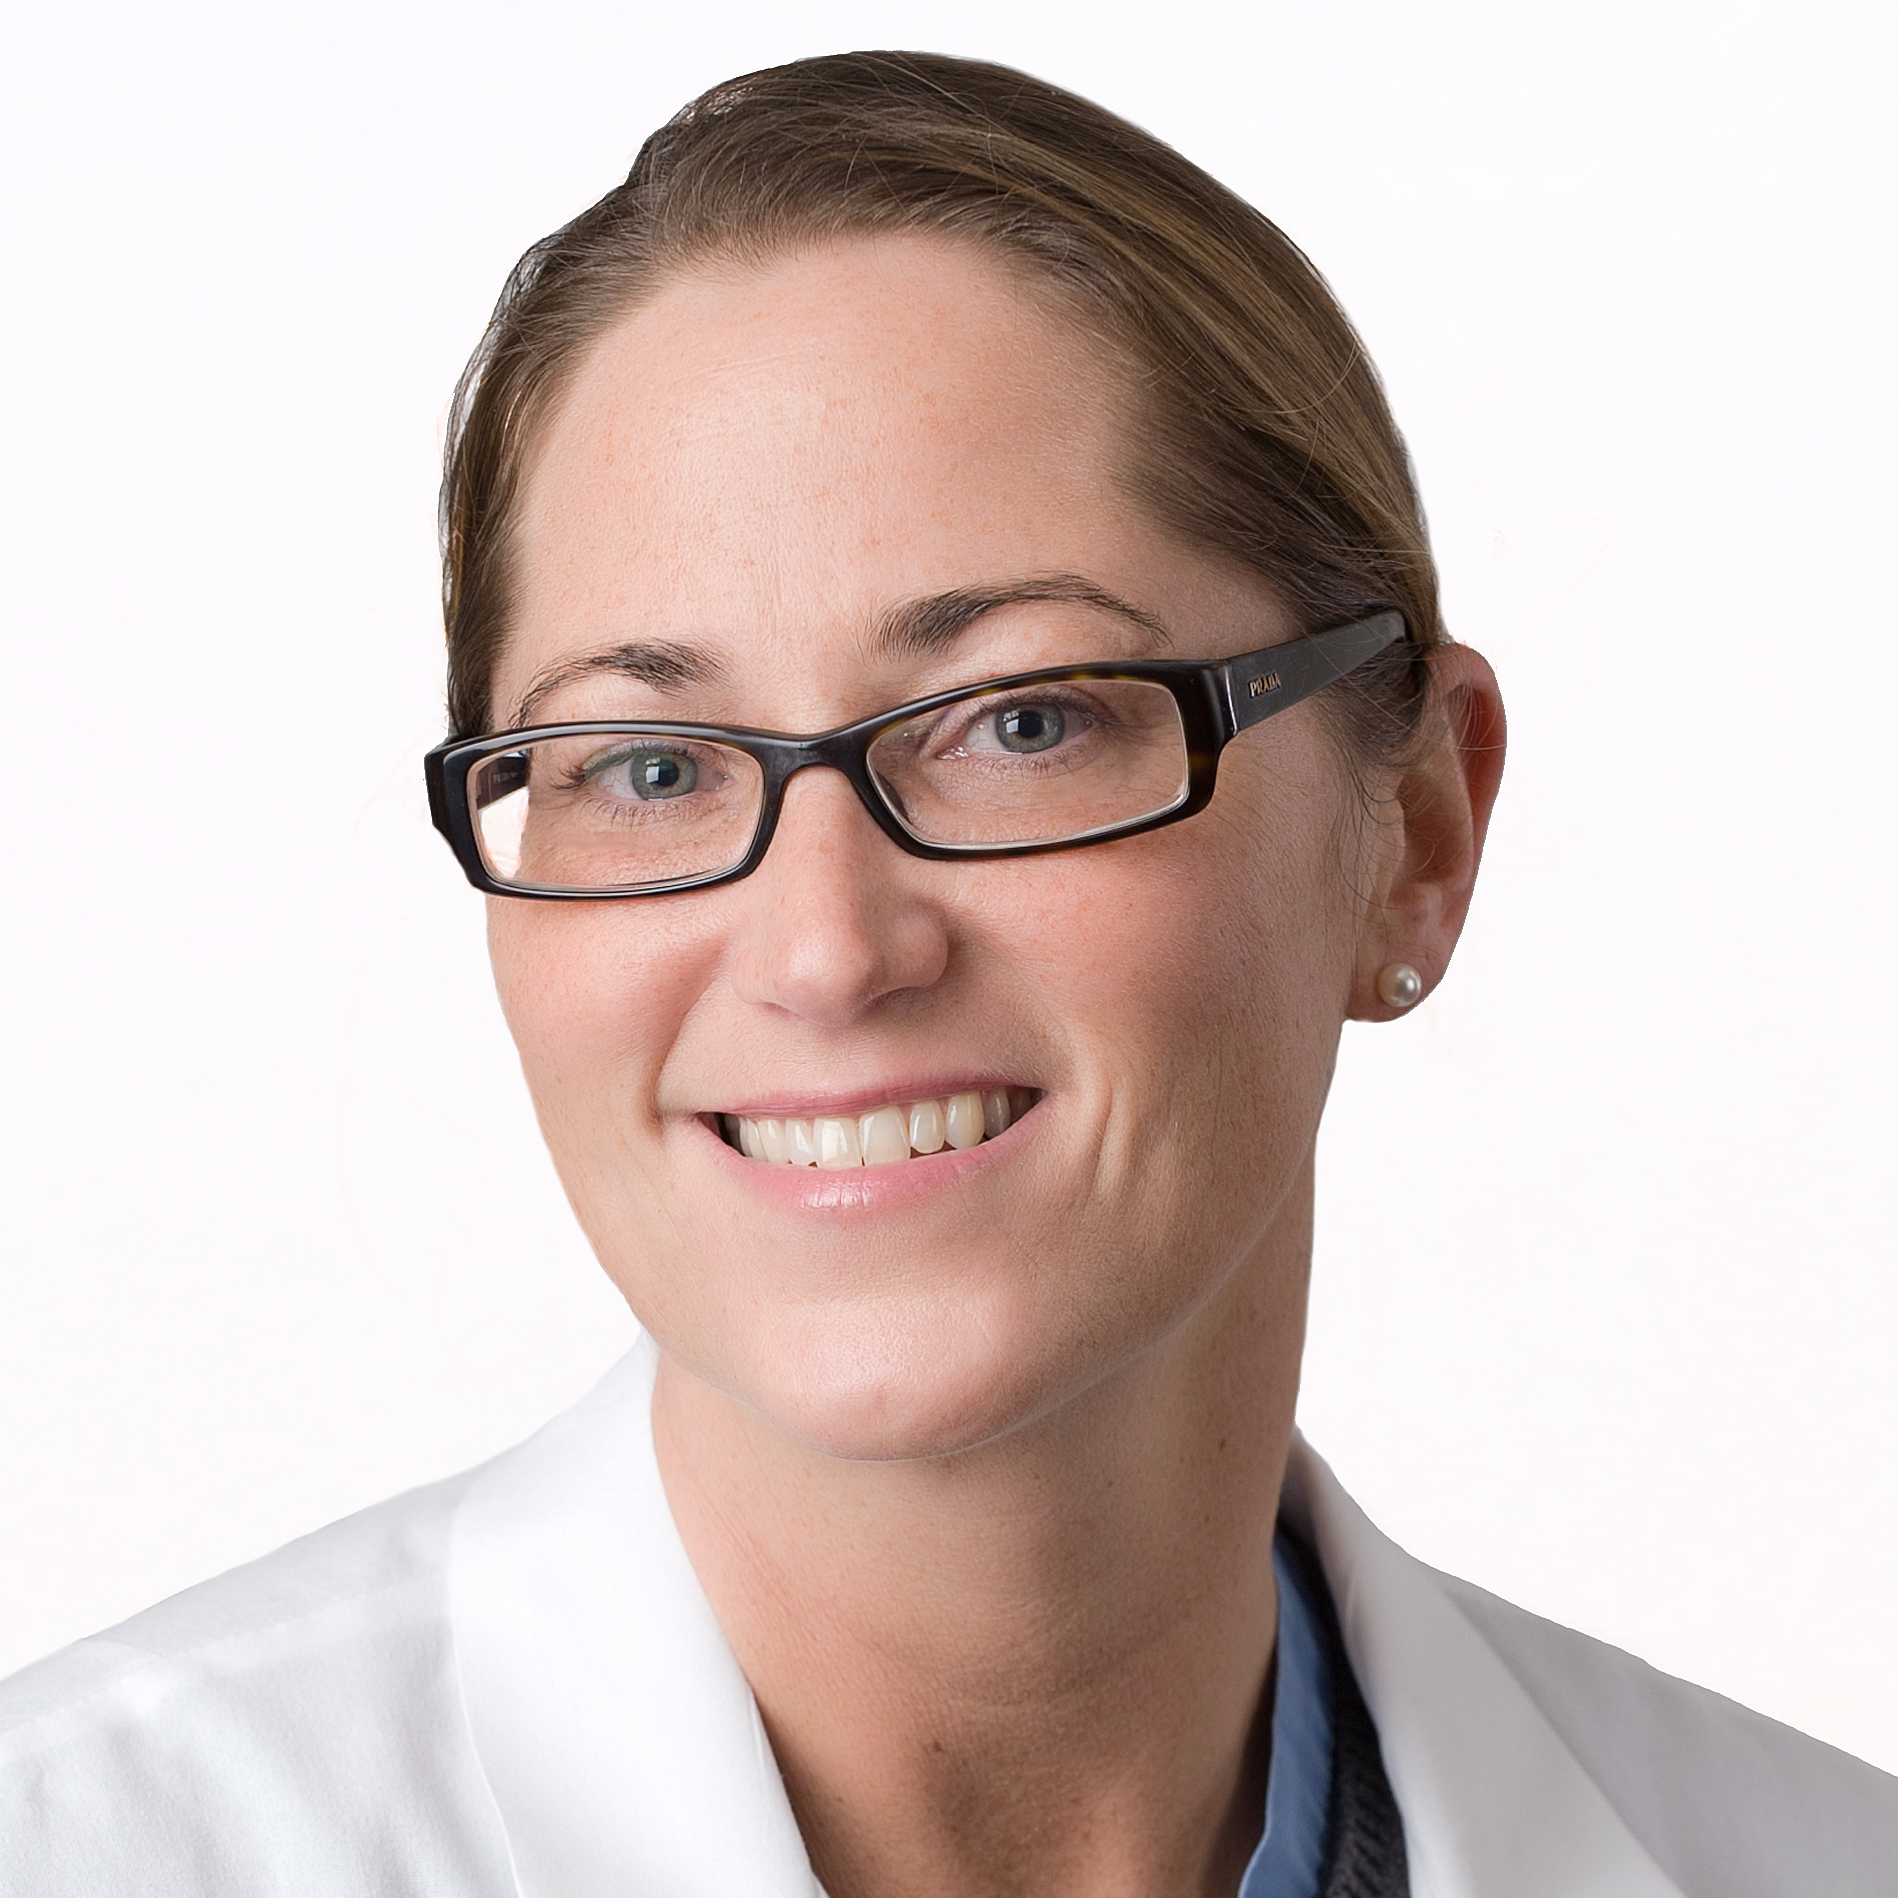 APP Physician Assistant Lisa Berger